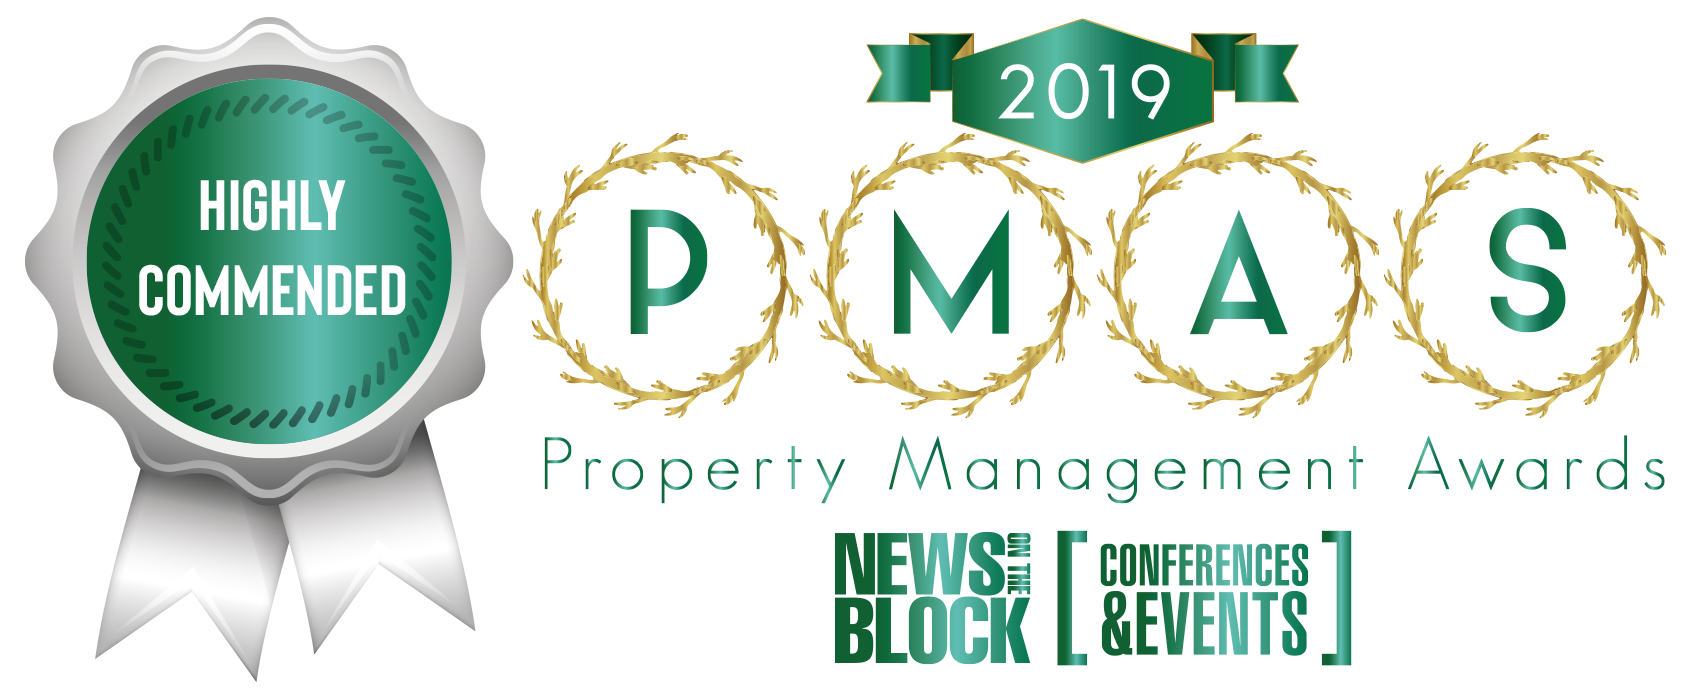 Property Management Awards 2019